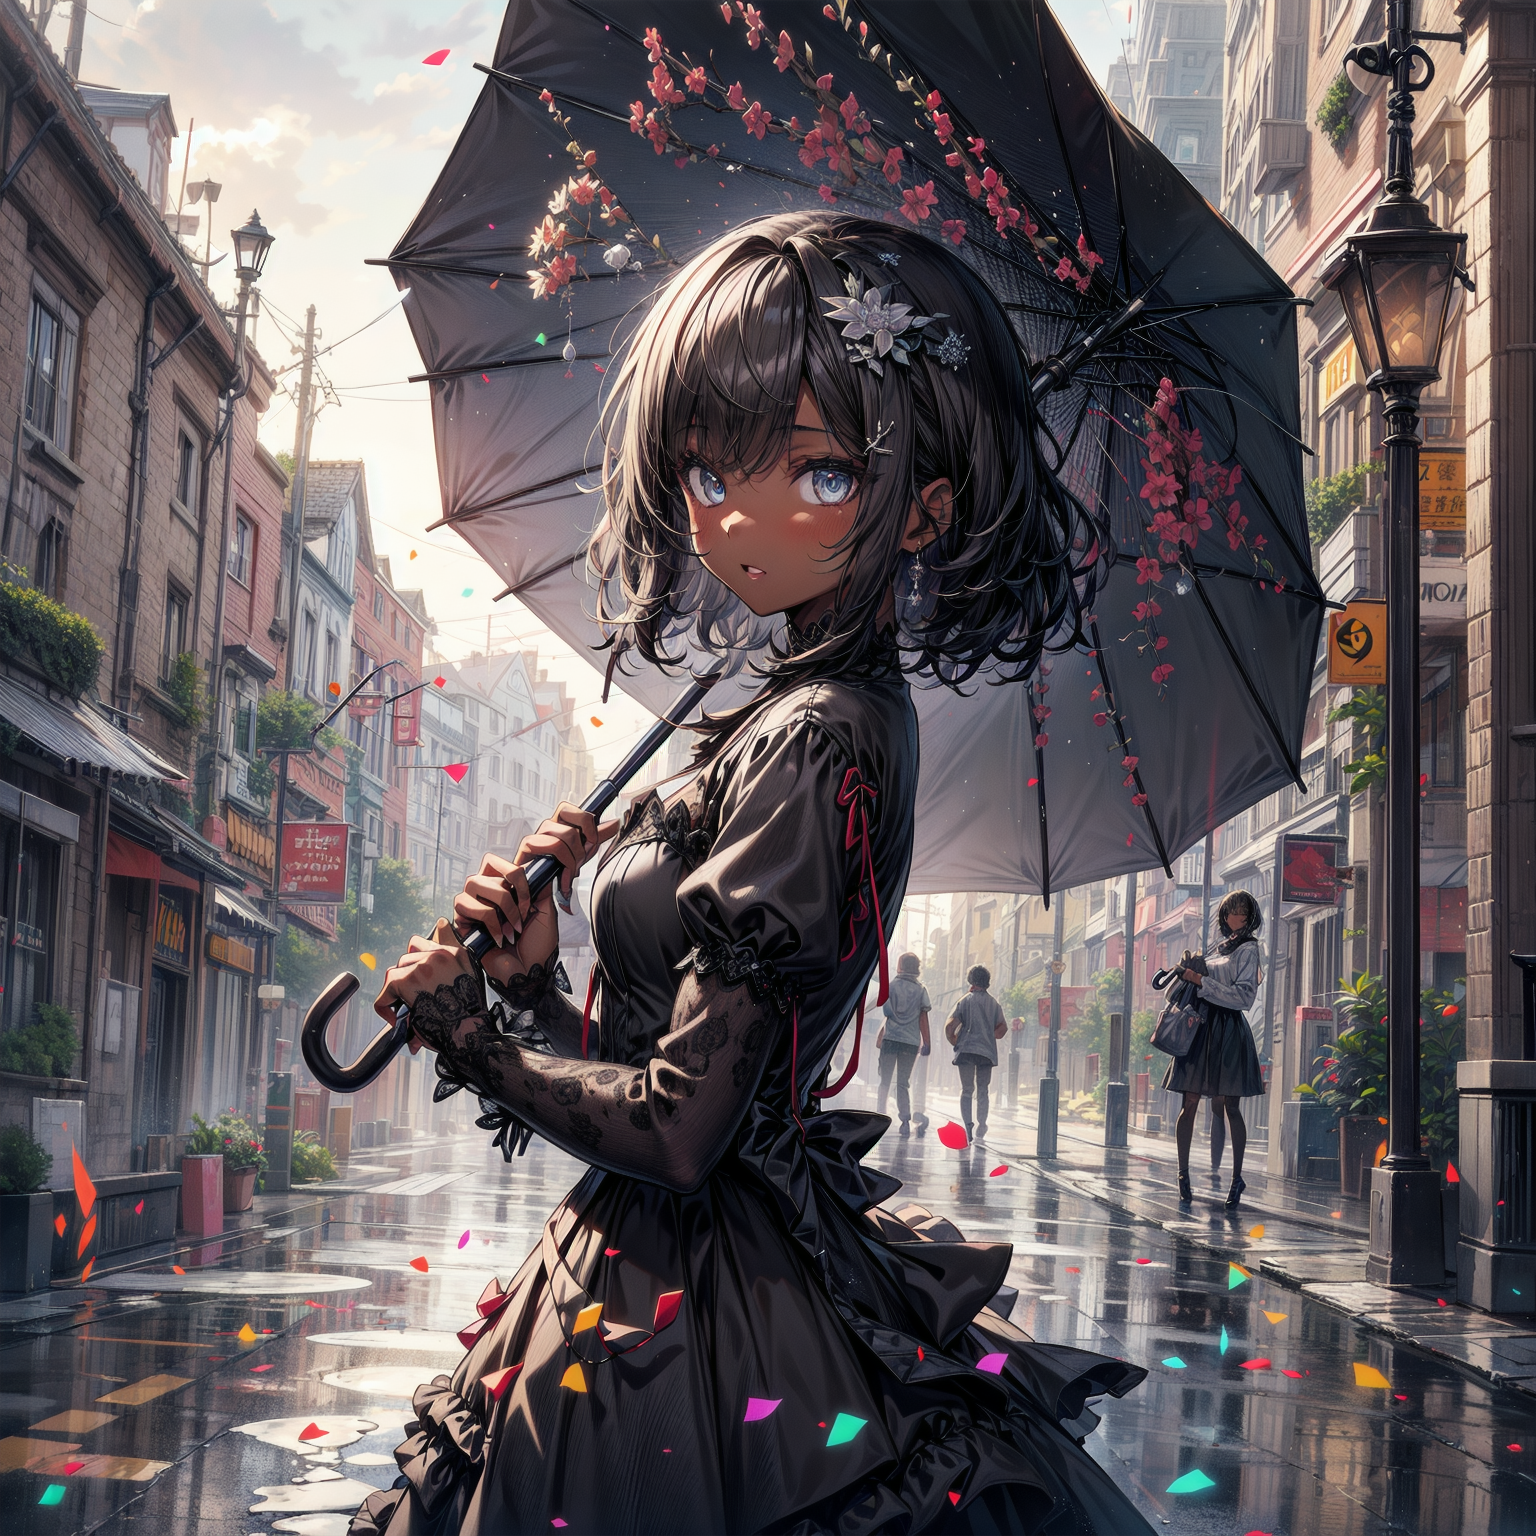 Dark girl with umbrella [Artist: theDURRRRIAN] - Original anime